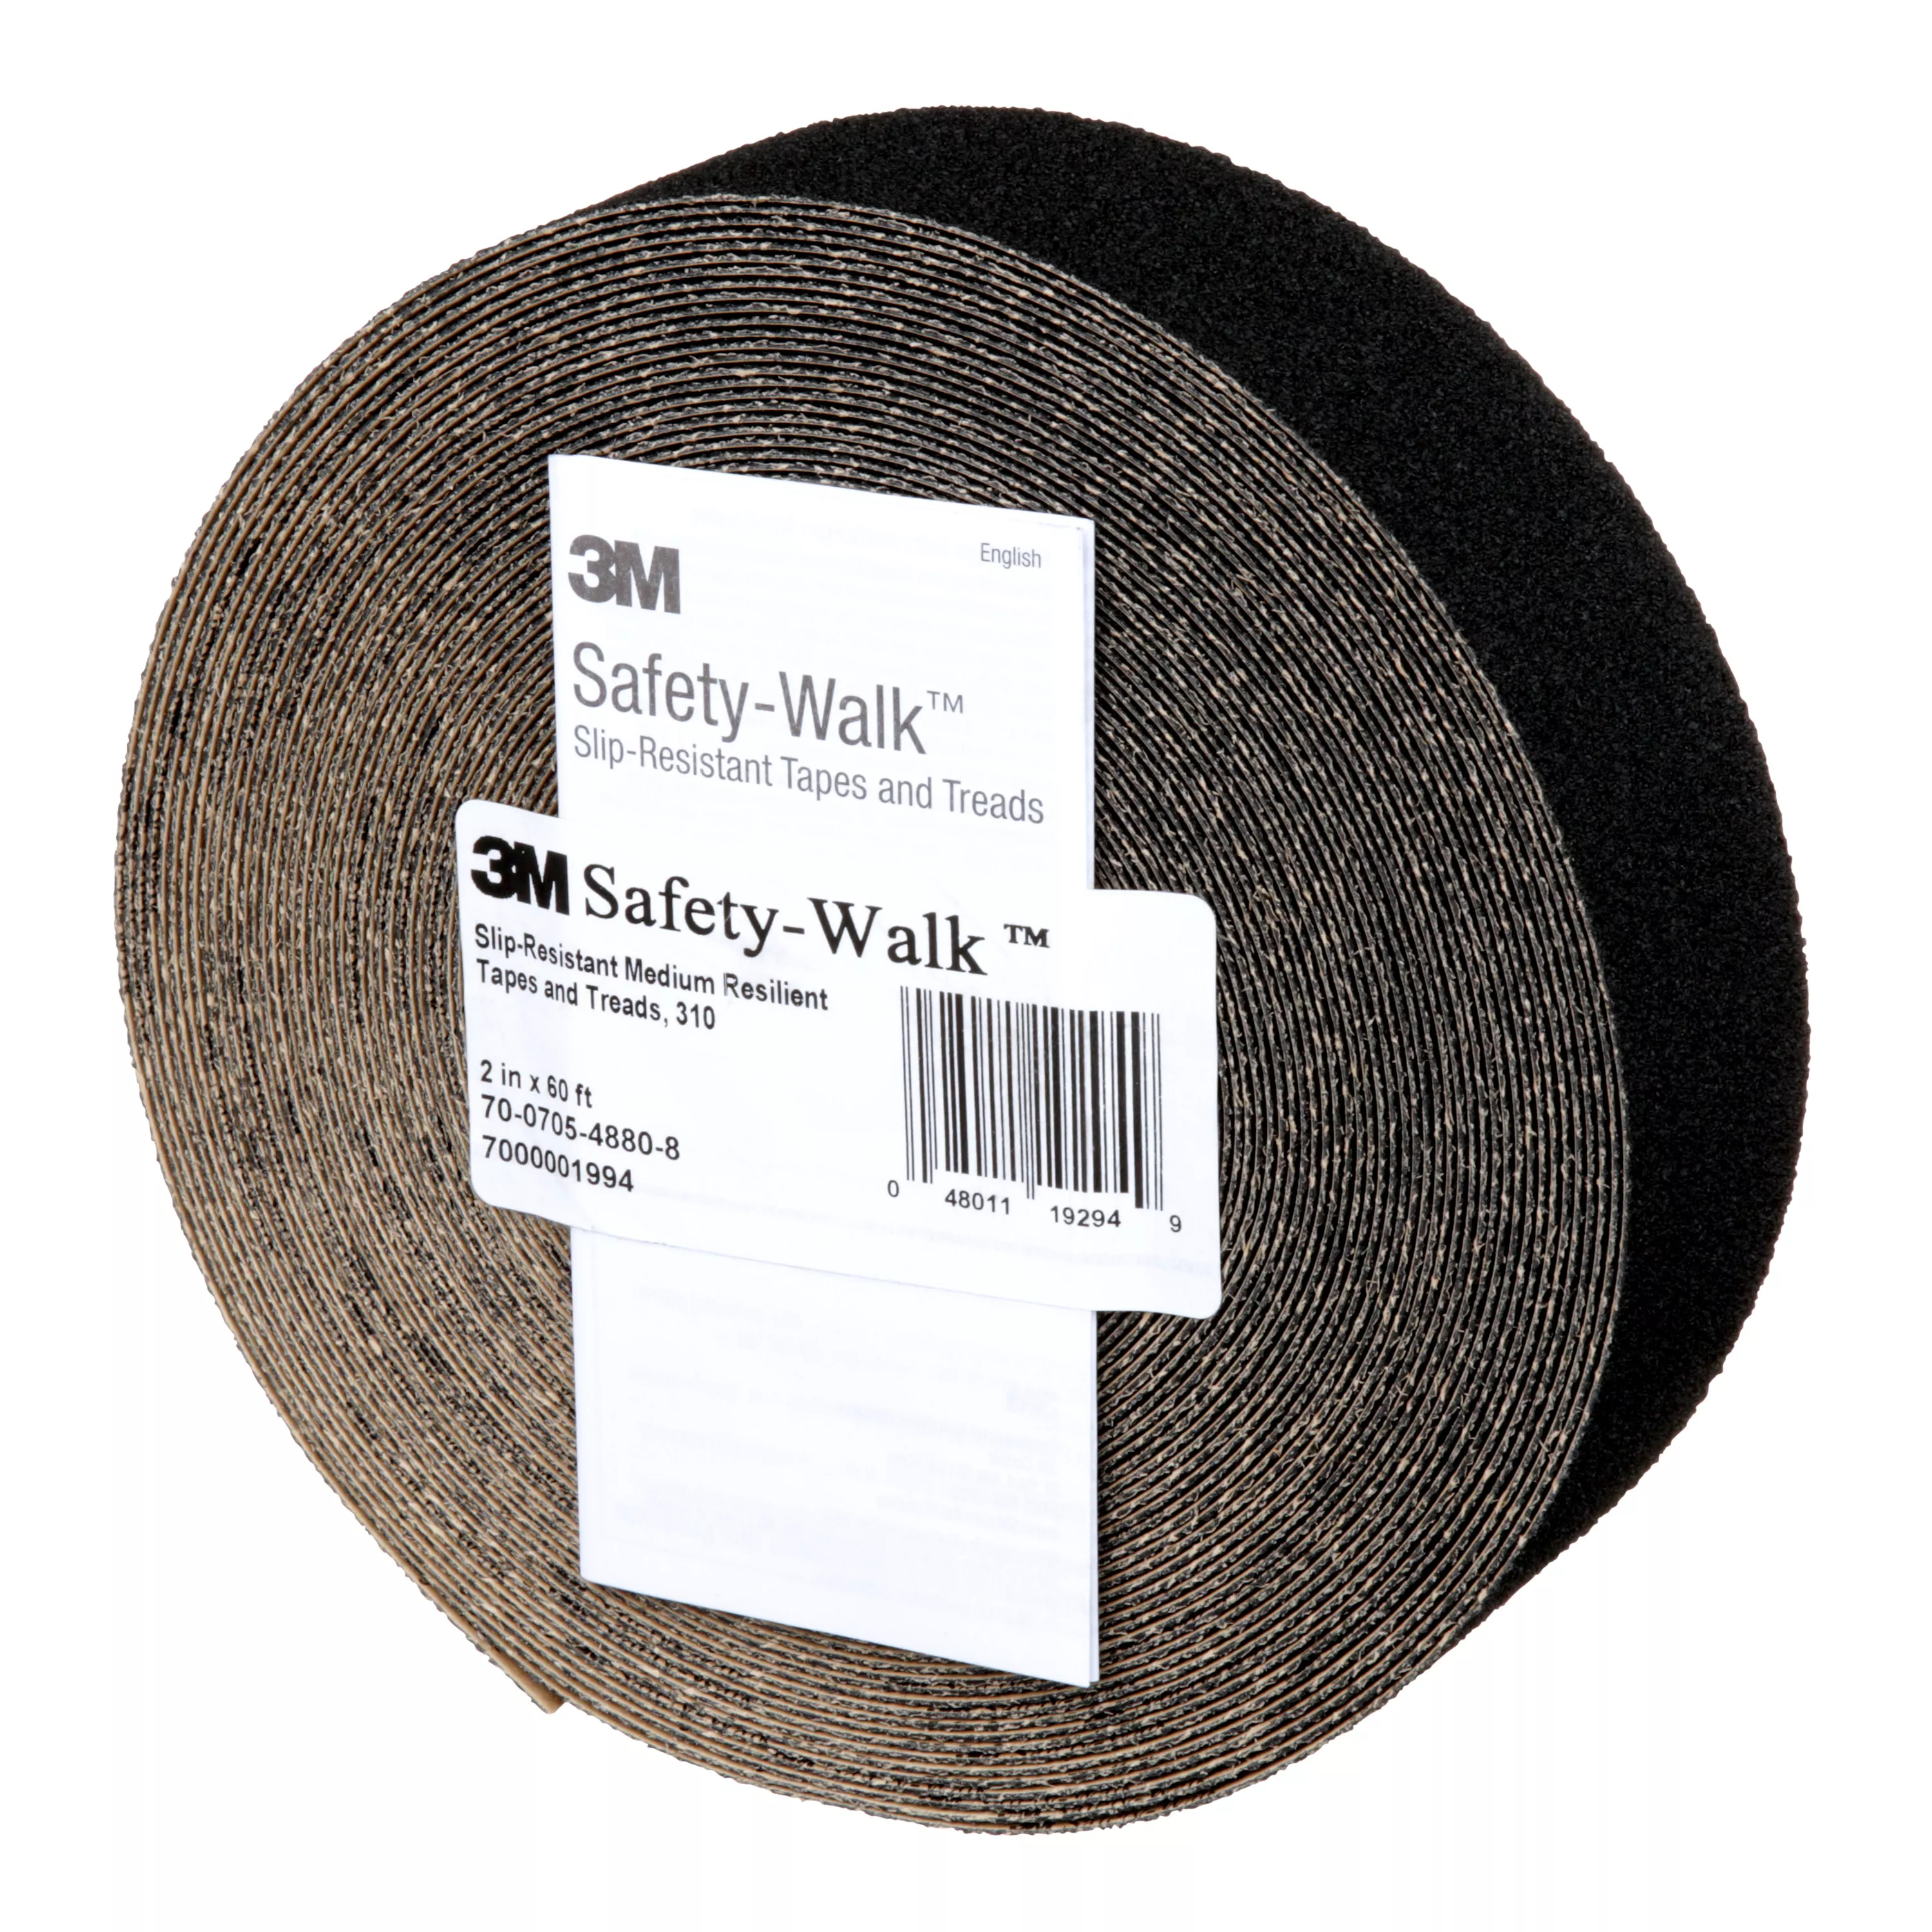 SKU 7000001994 | 3M™ Safety-Walk™ Slip-Resistant Medium Resilient Tapes & Treads 310